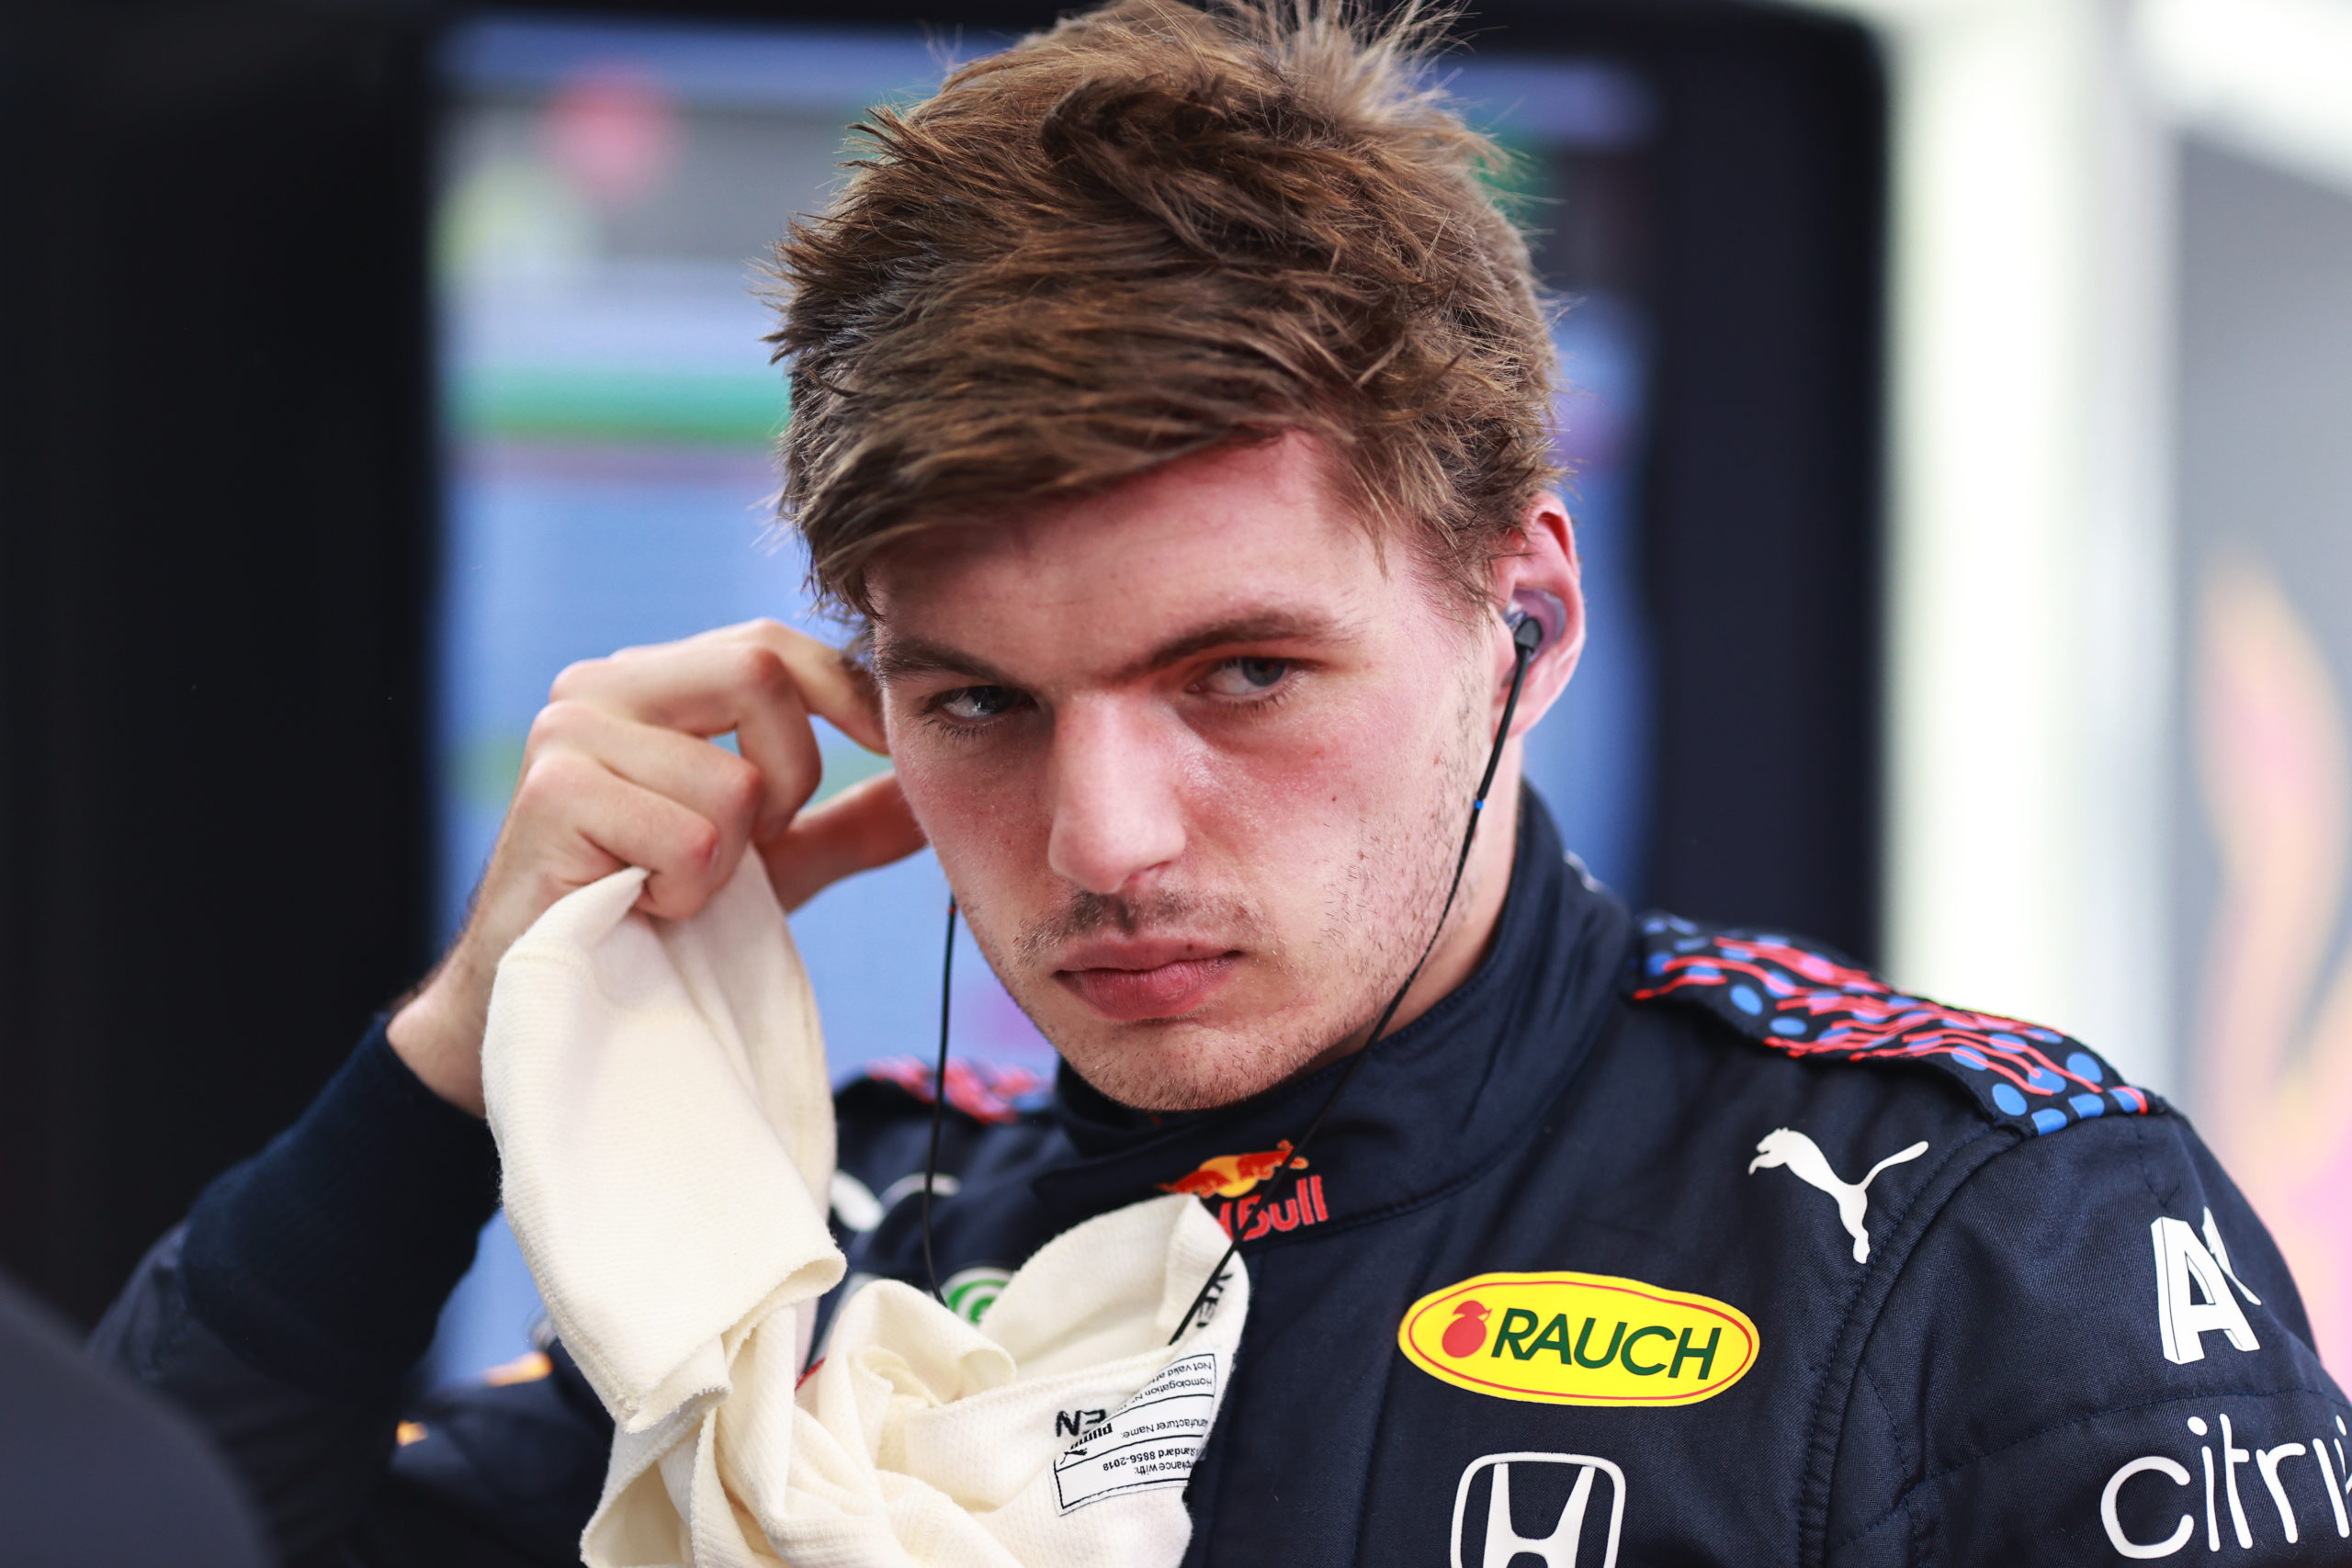 2021 Hungarian Grand Prix, Saturday - Max Verstappen (image courtesy Red Bull Racing)